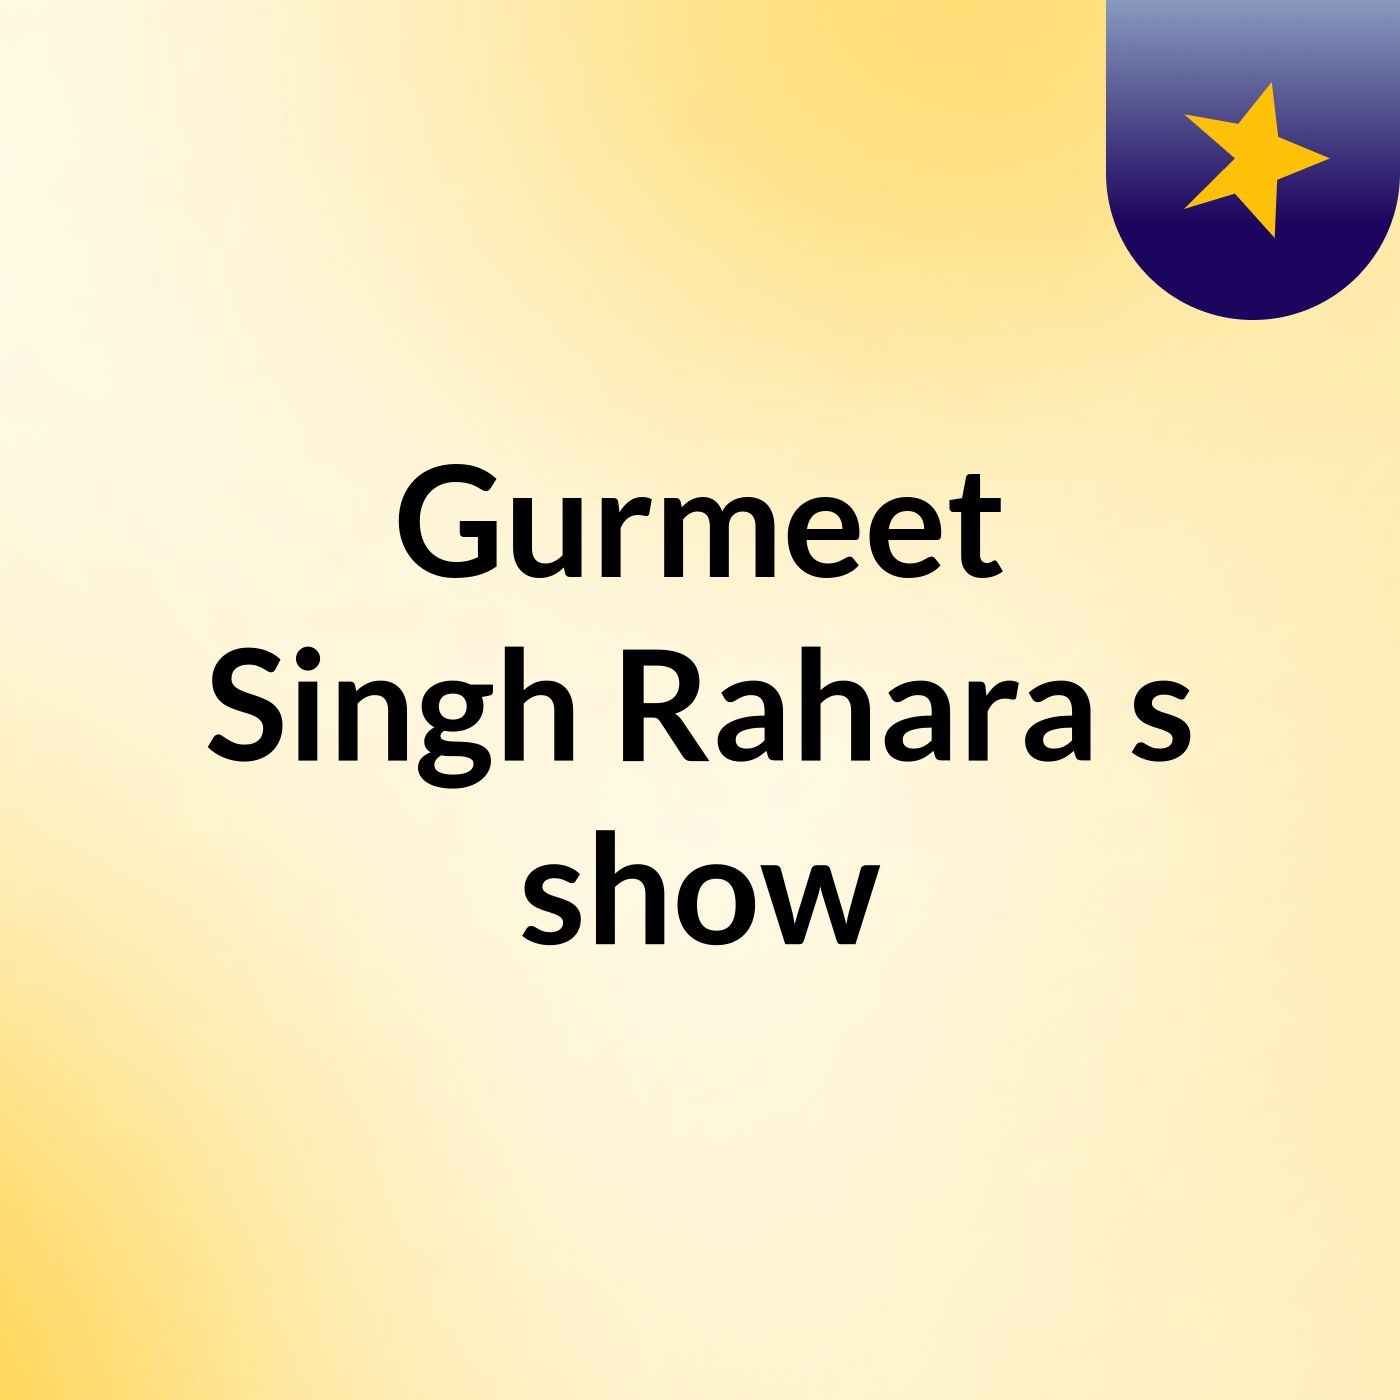 Gurmeet Singh Rahara's show